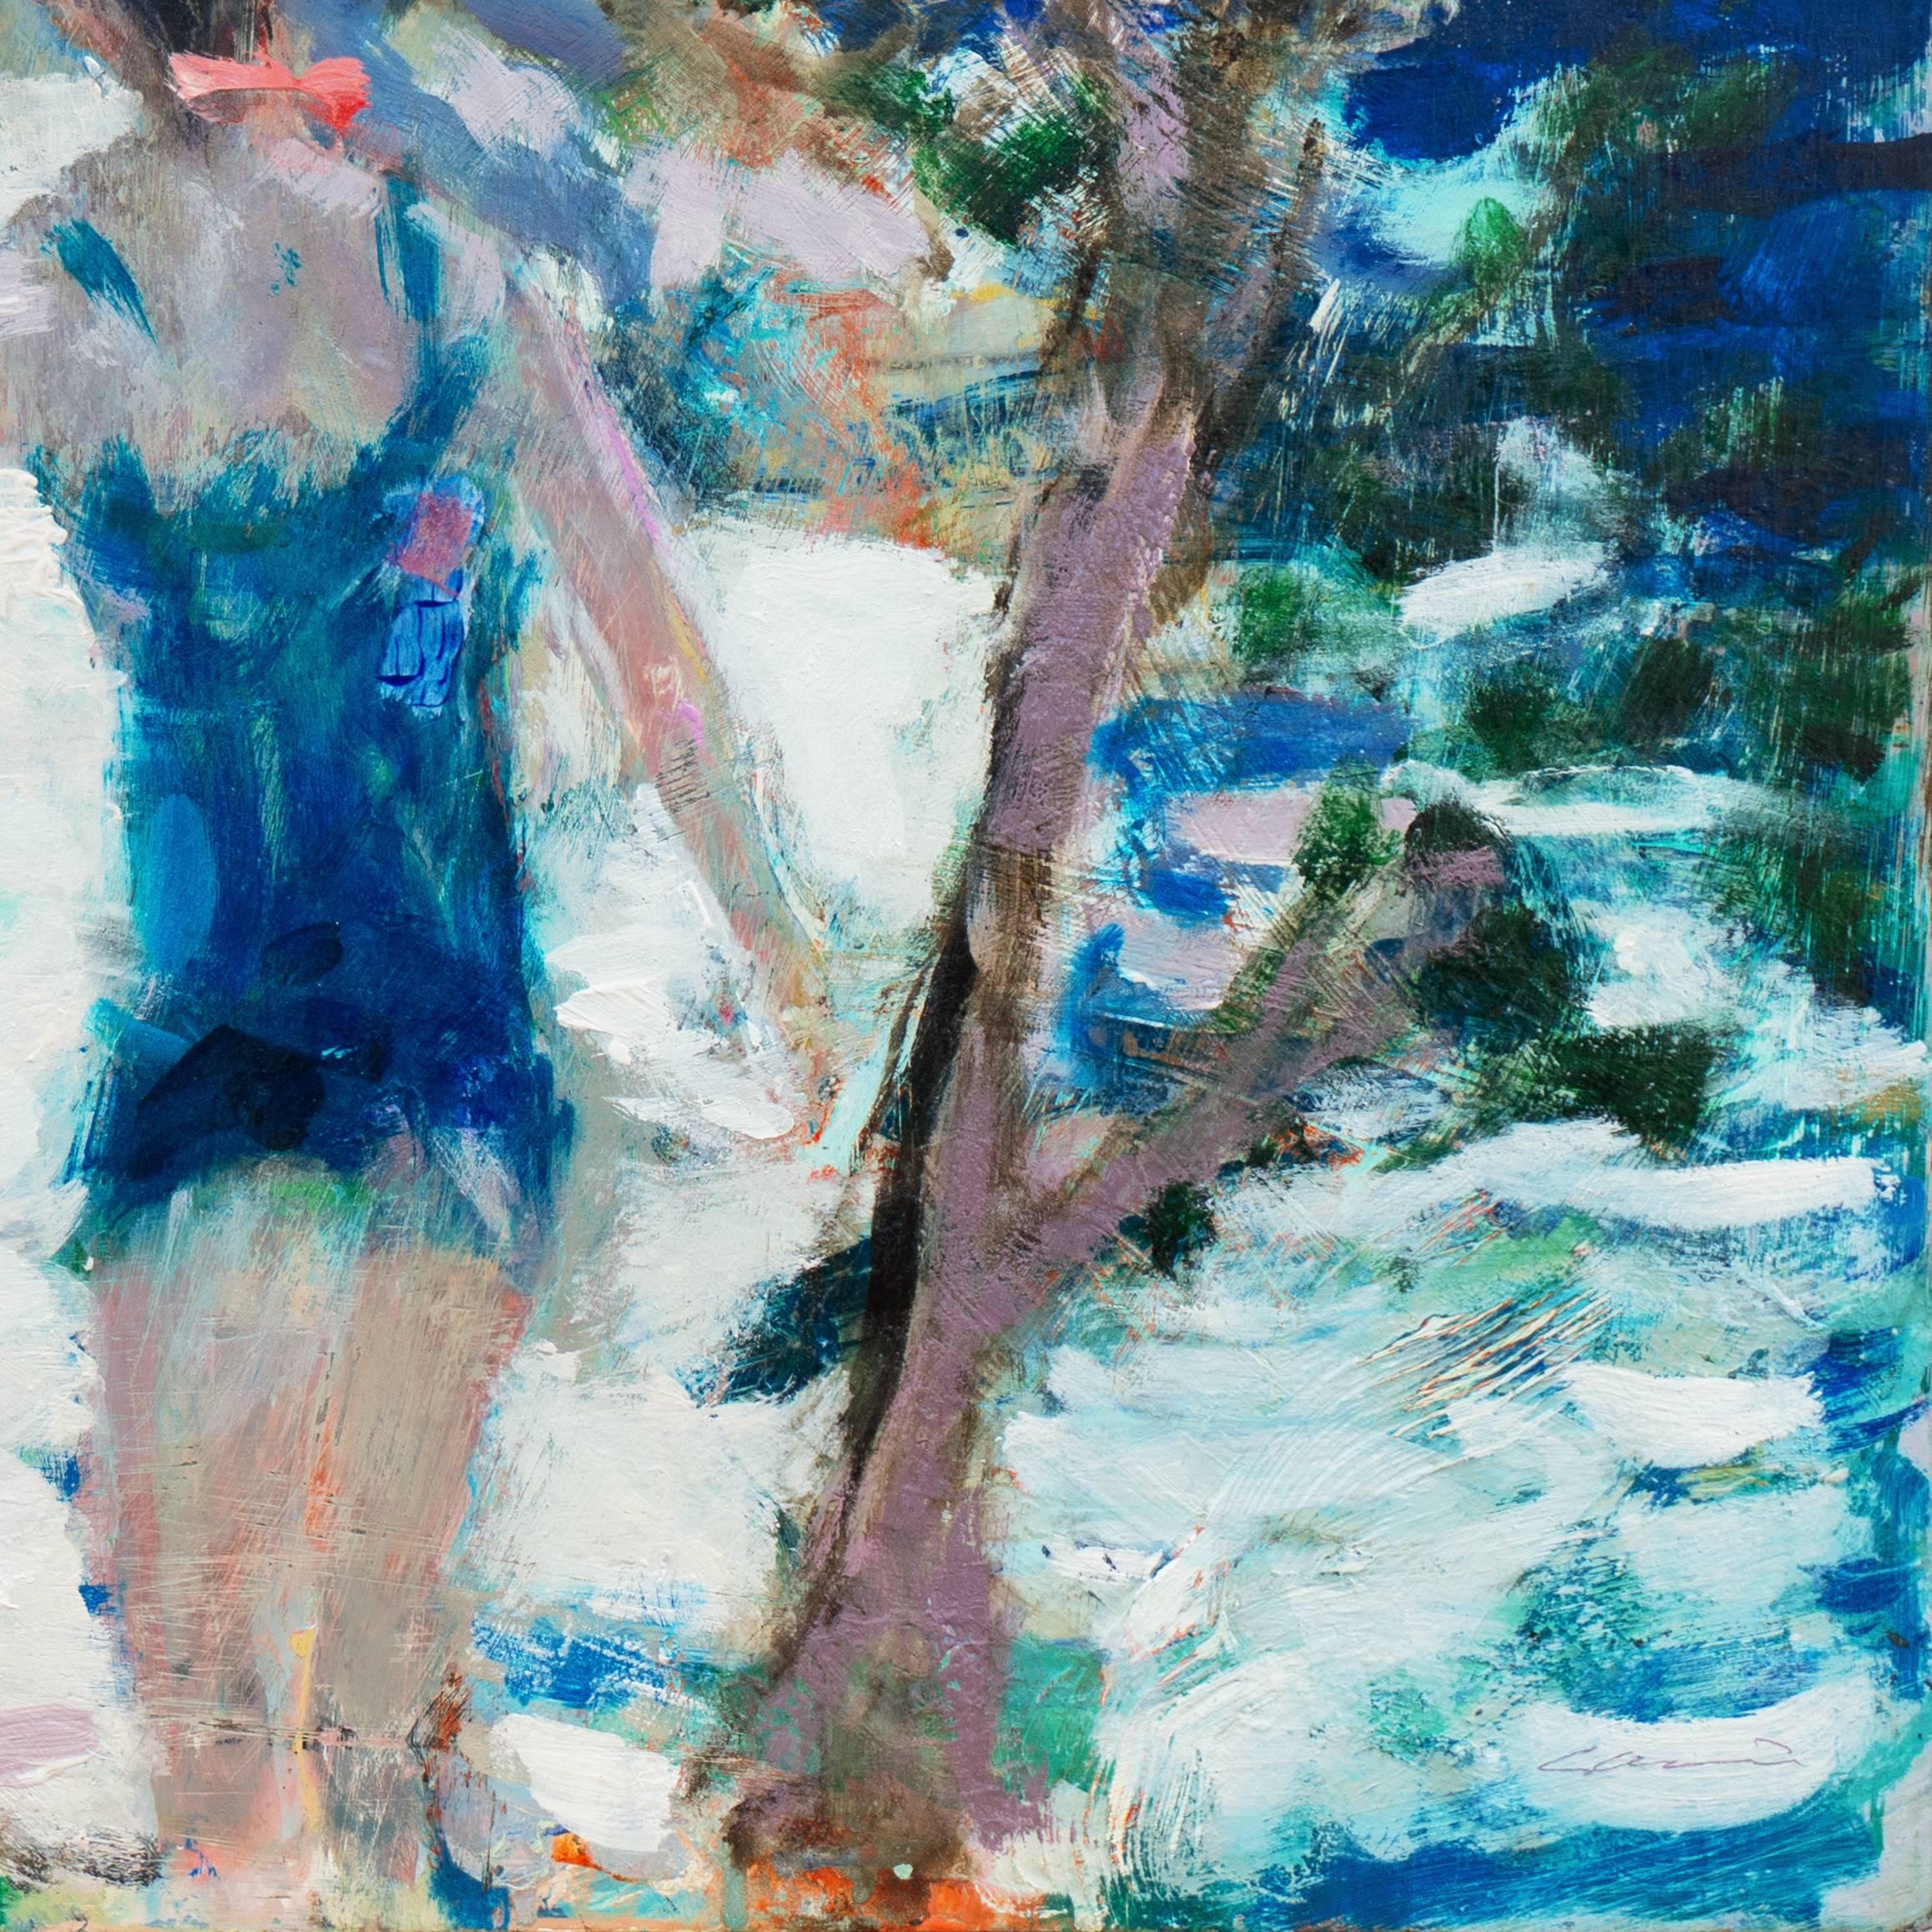 'Young Woman Bathing, Carmel', California Post-Impressionist, Stanford, Big Sur 2